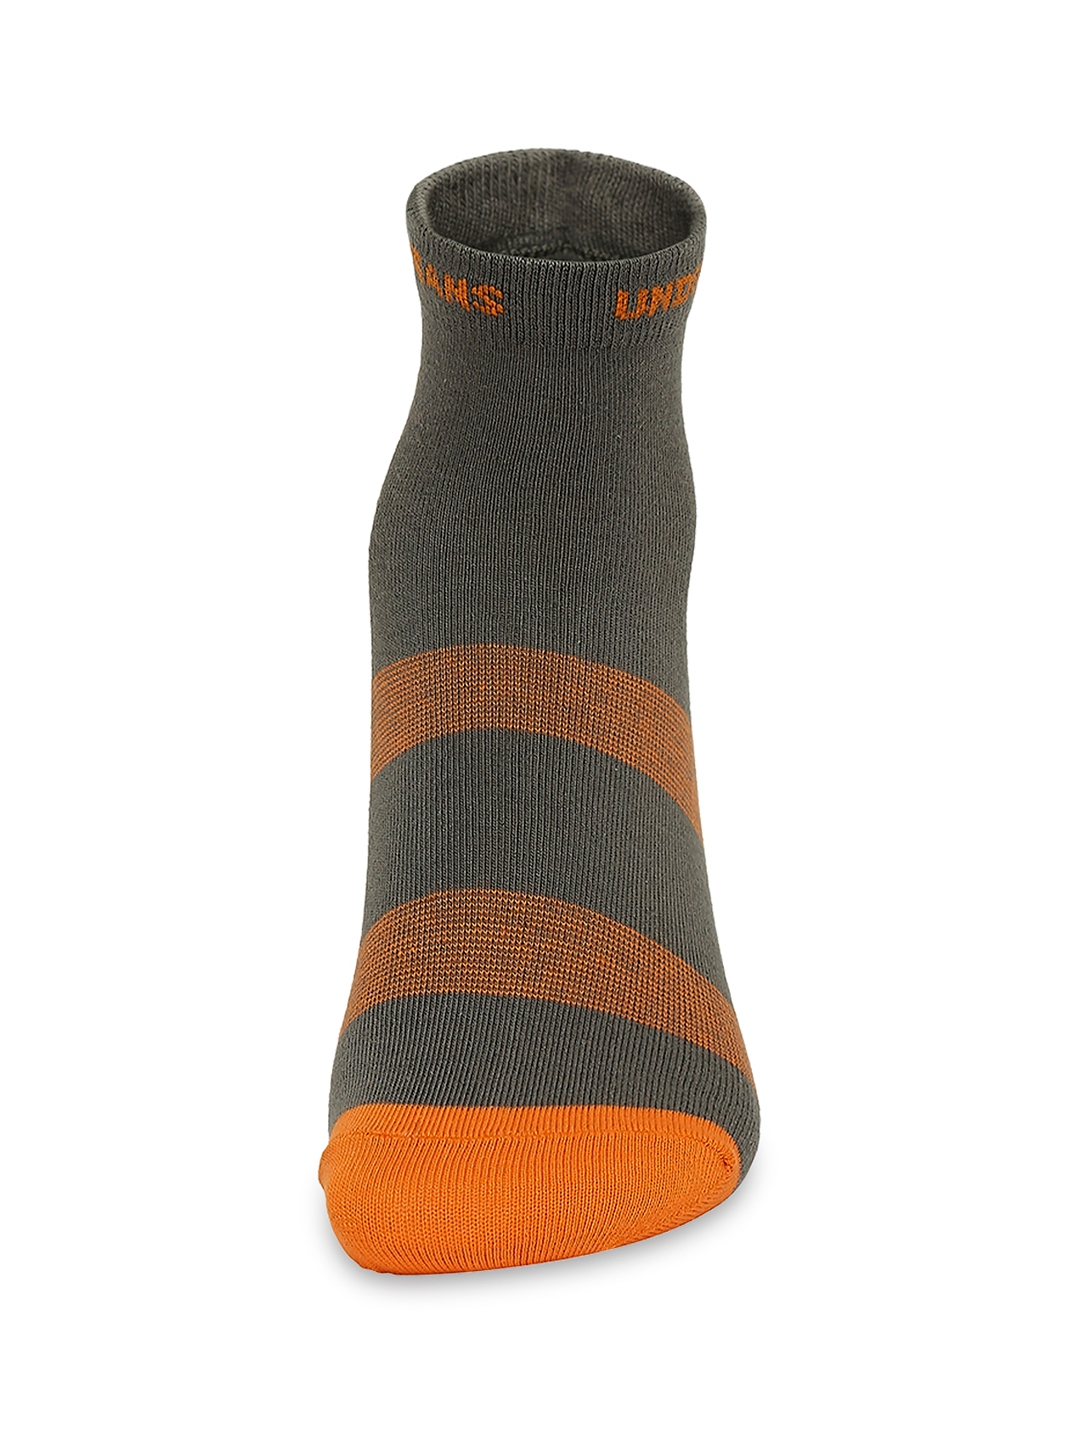 spykar | Underjeans by Spykar Premium Dark Grey & Navy Ankle Length Socks - Pack Of 2 4